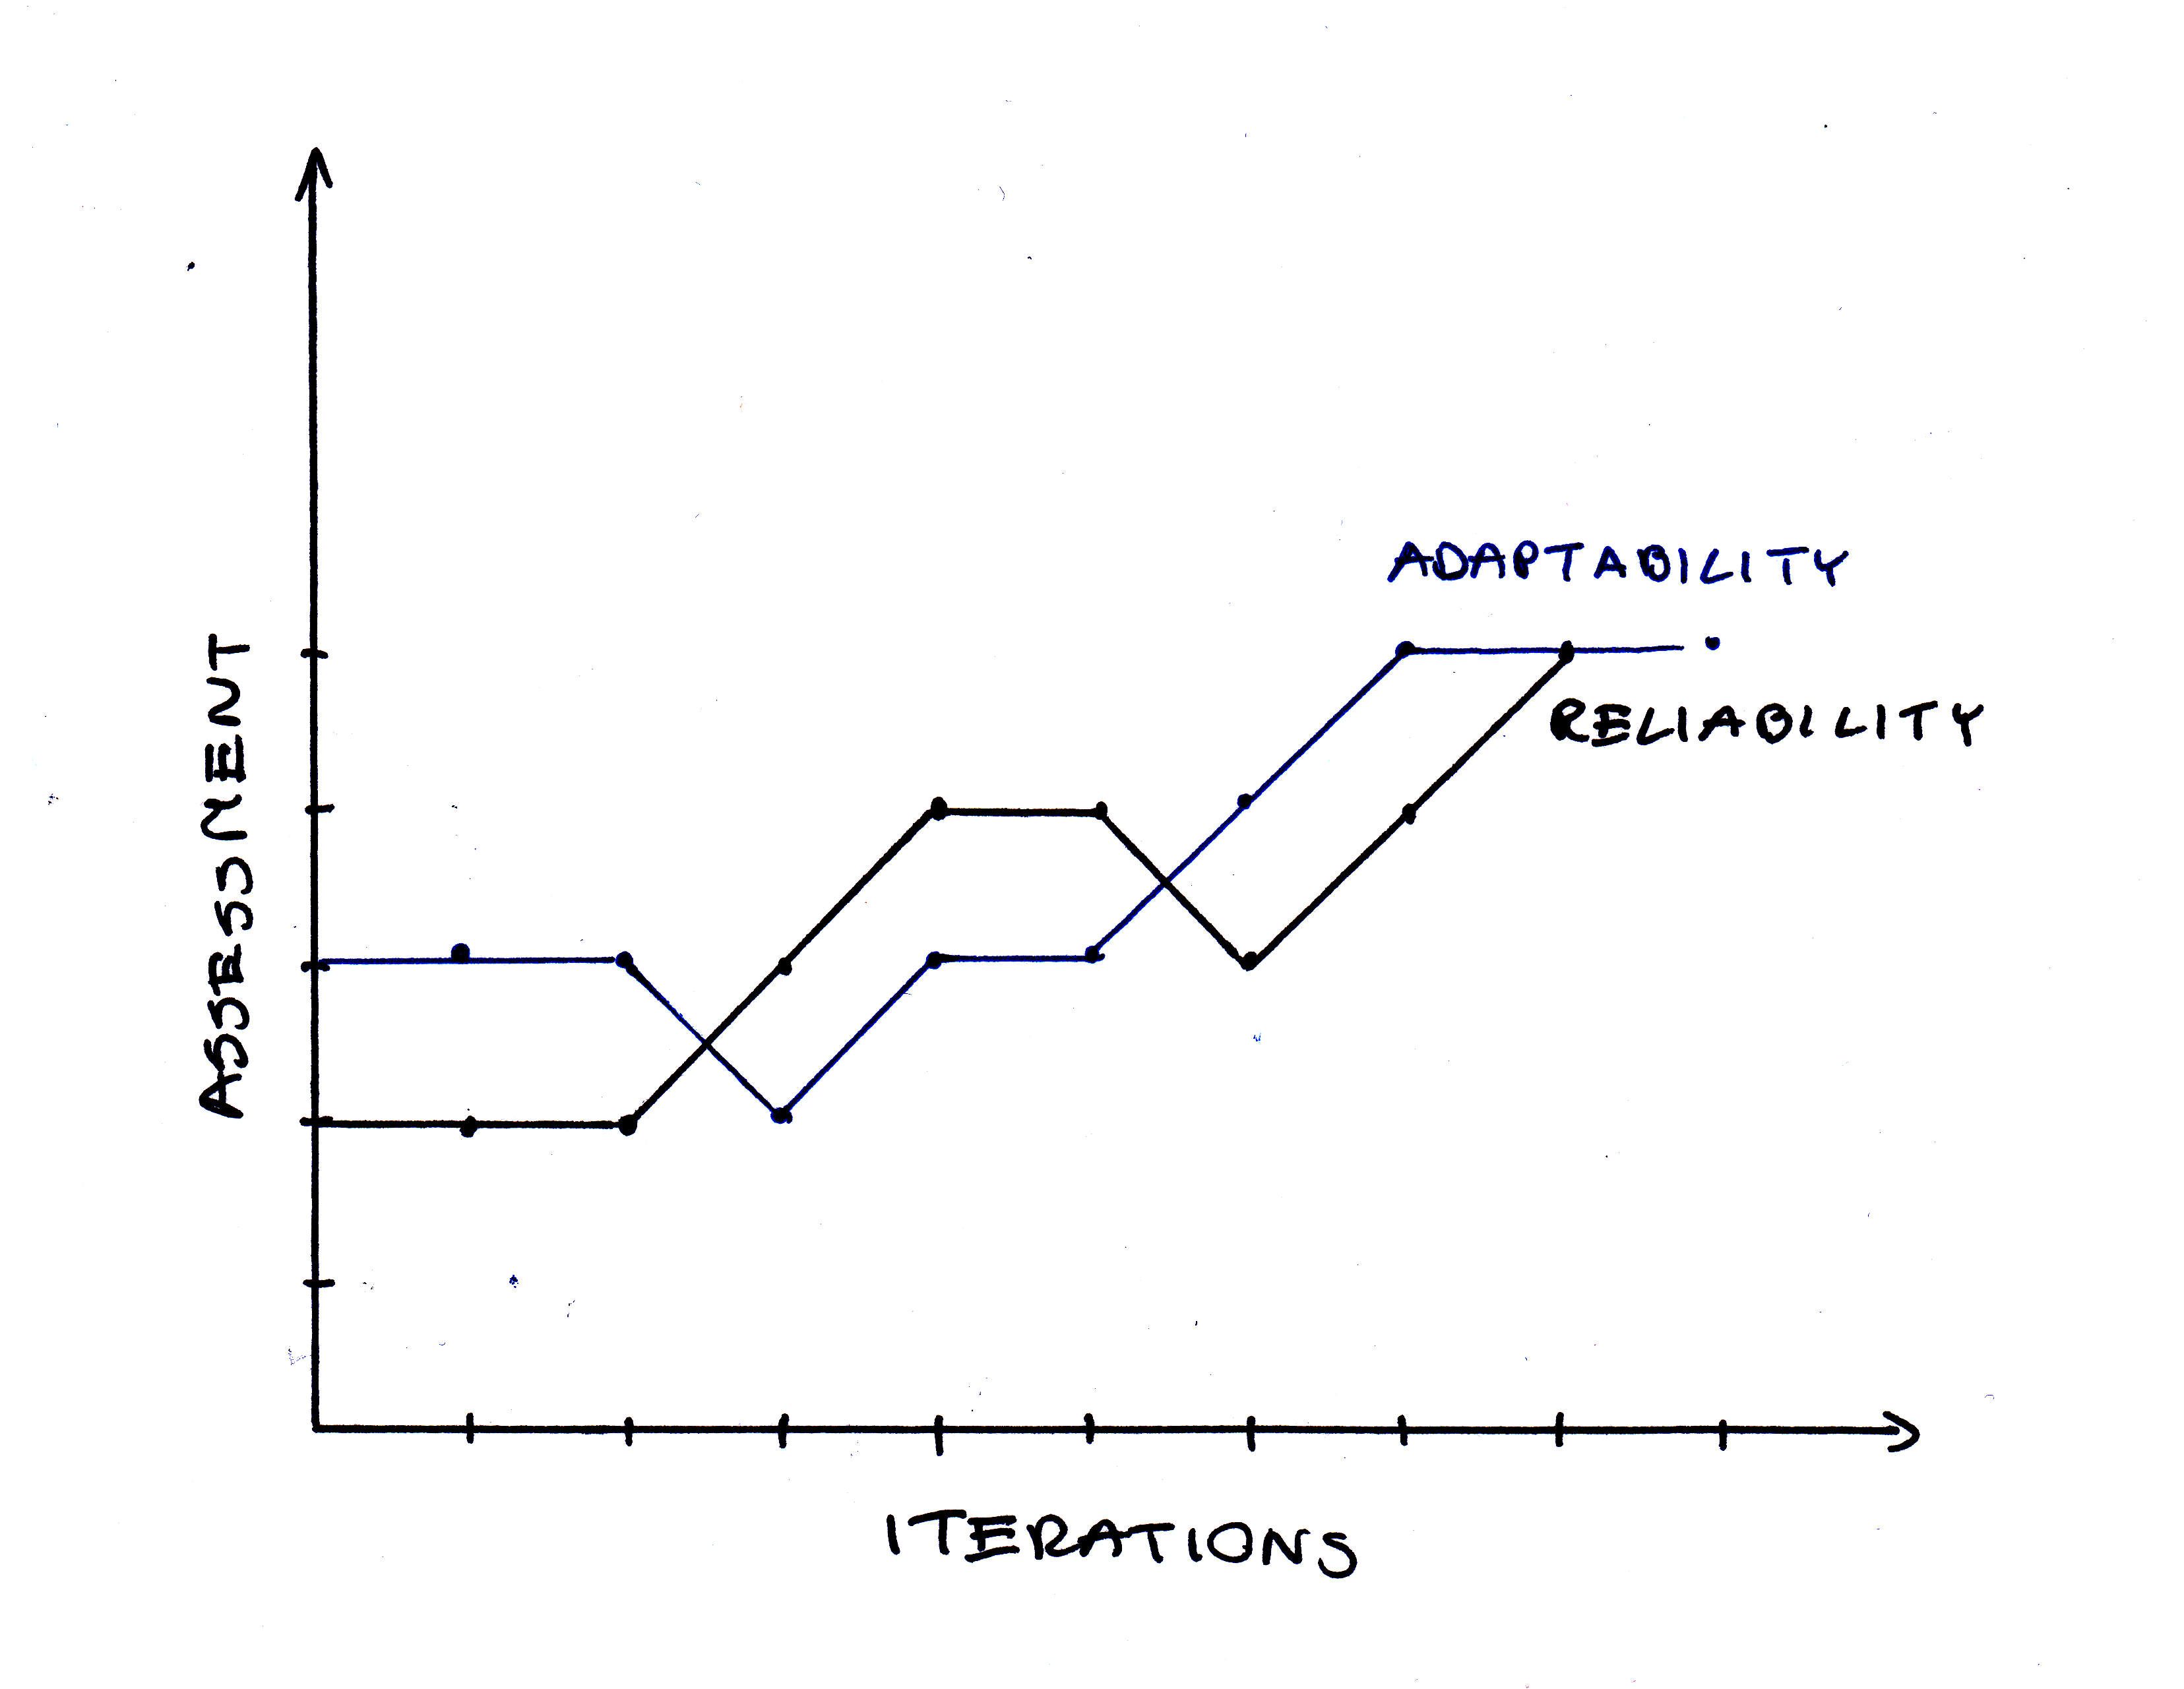 reliability_adaptability_assessment